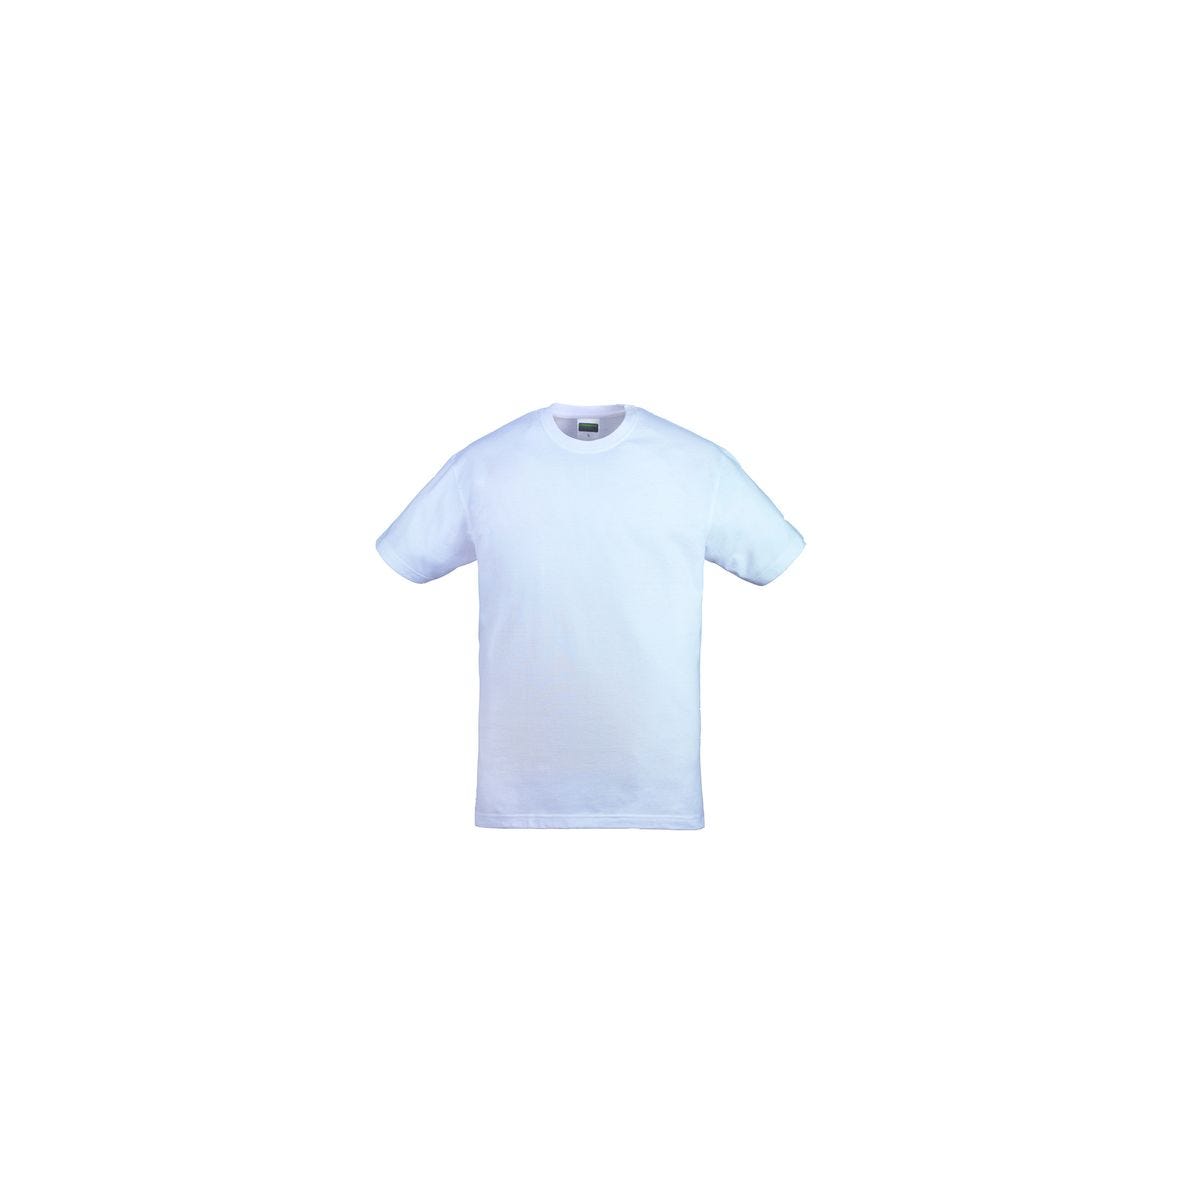 T-shirt TRIP MC blanc - COVERGUARD - Taille 3XL 0